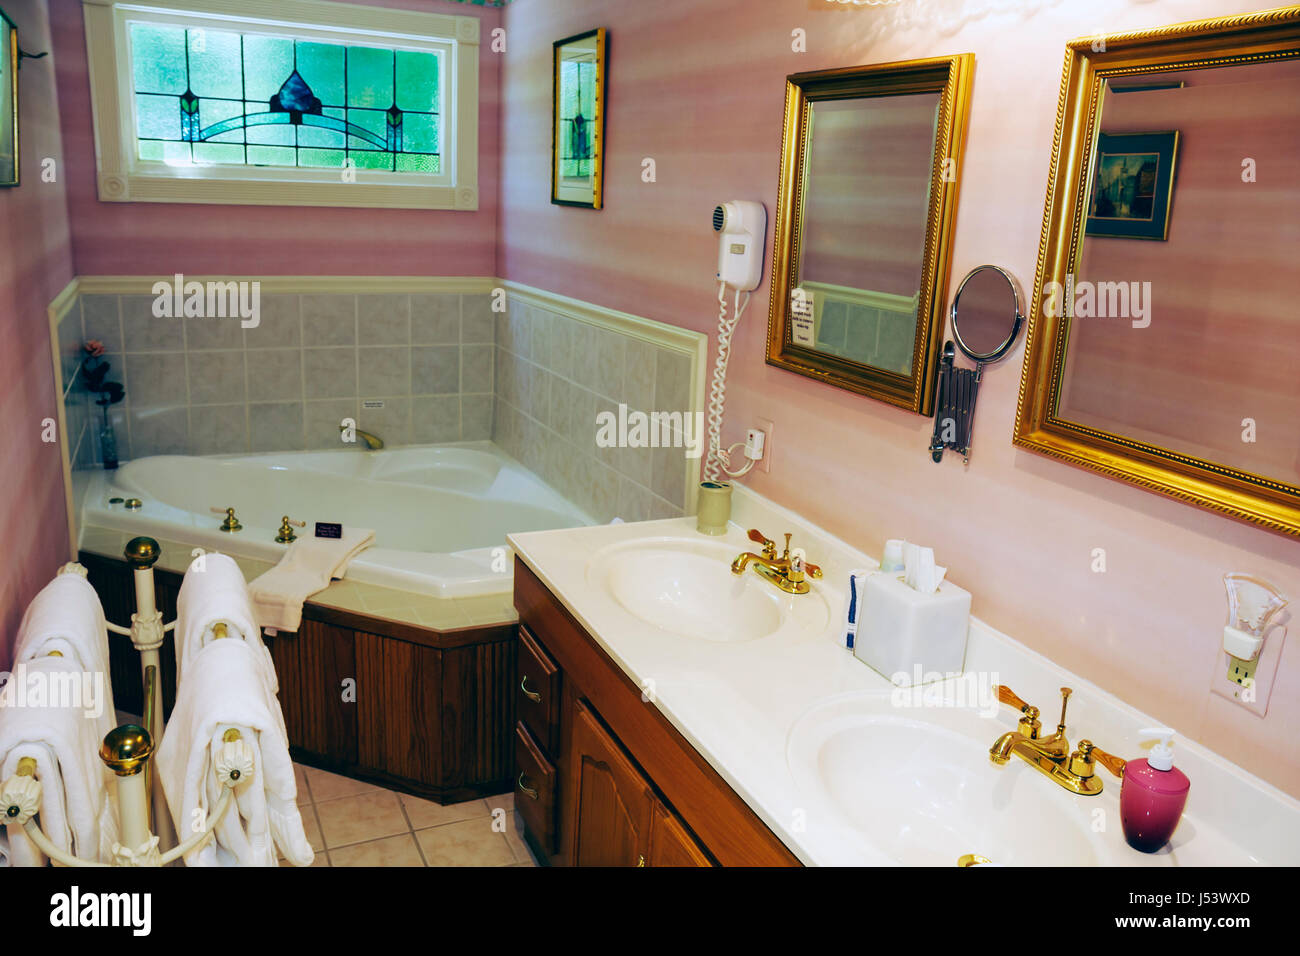 Eureka Springs Arkansas,Ozark Mountains,Arsenic & Old Lace Bed & Breakfast Inn,bathroom,sink,tub,double,his & hers,pink,Jacuzzi,AR080610018 Stock Photo